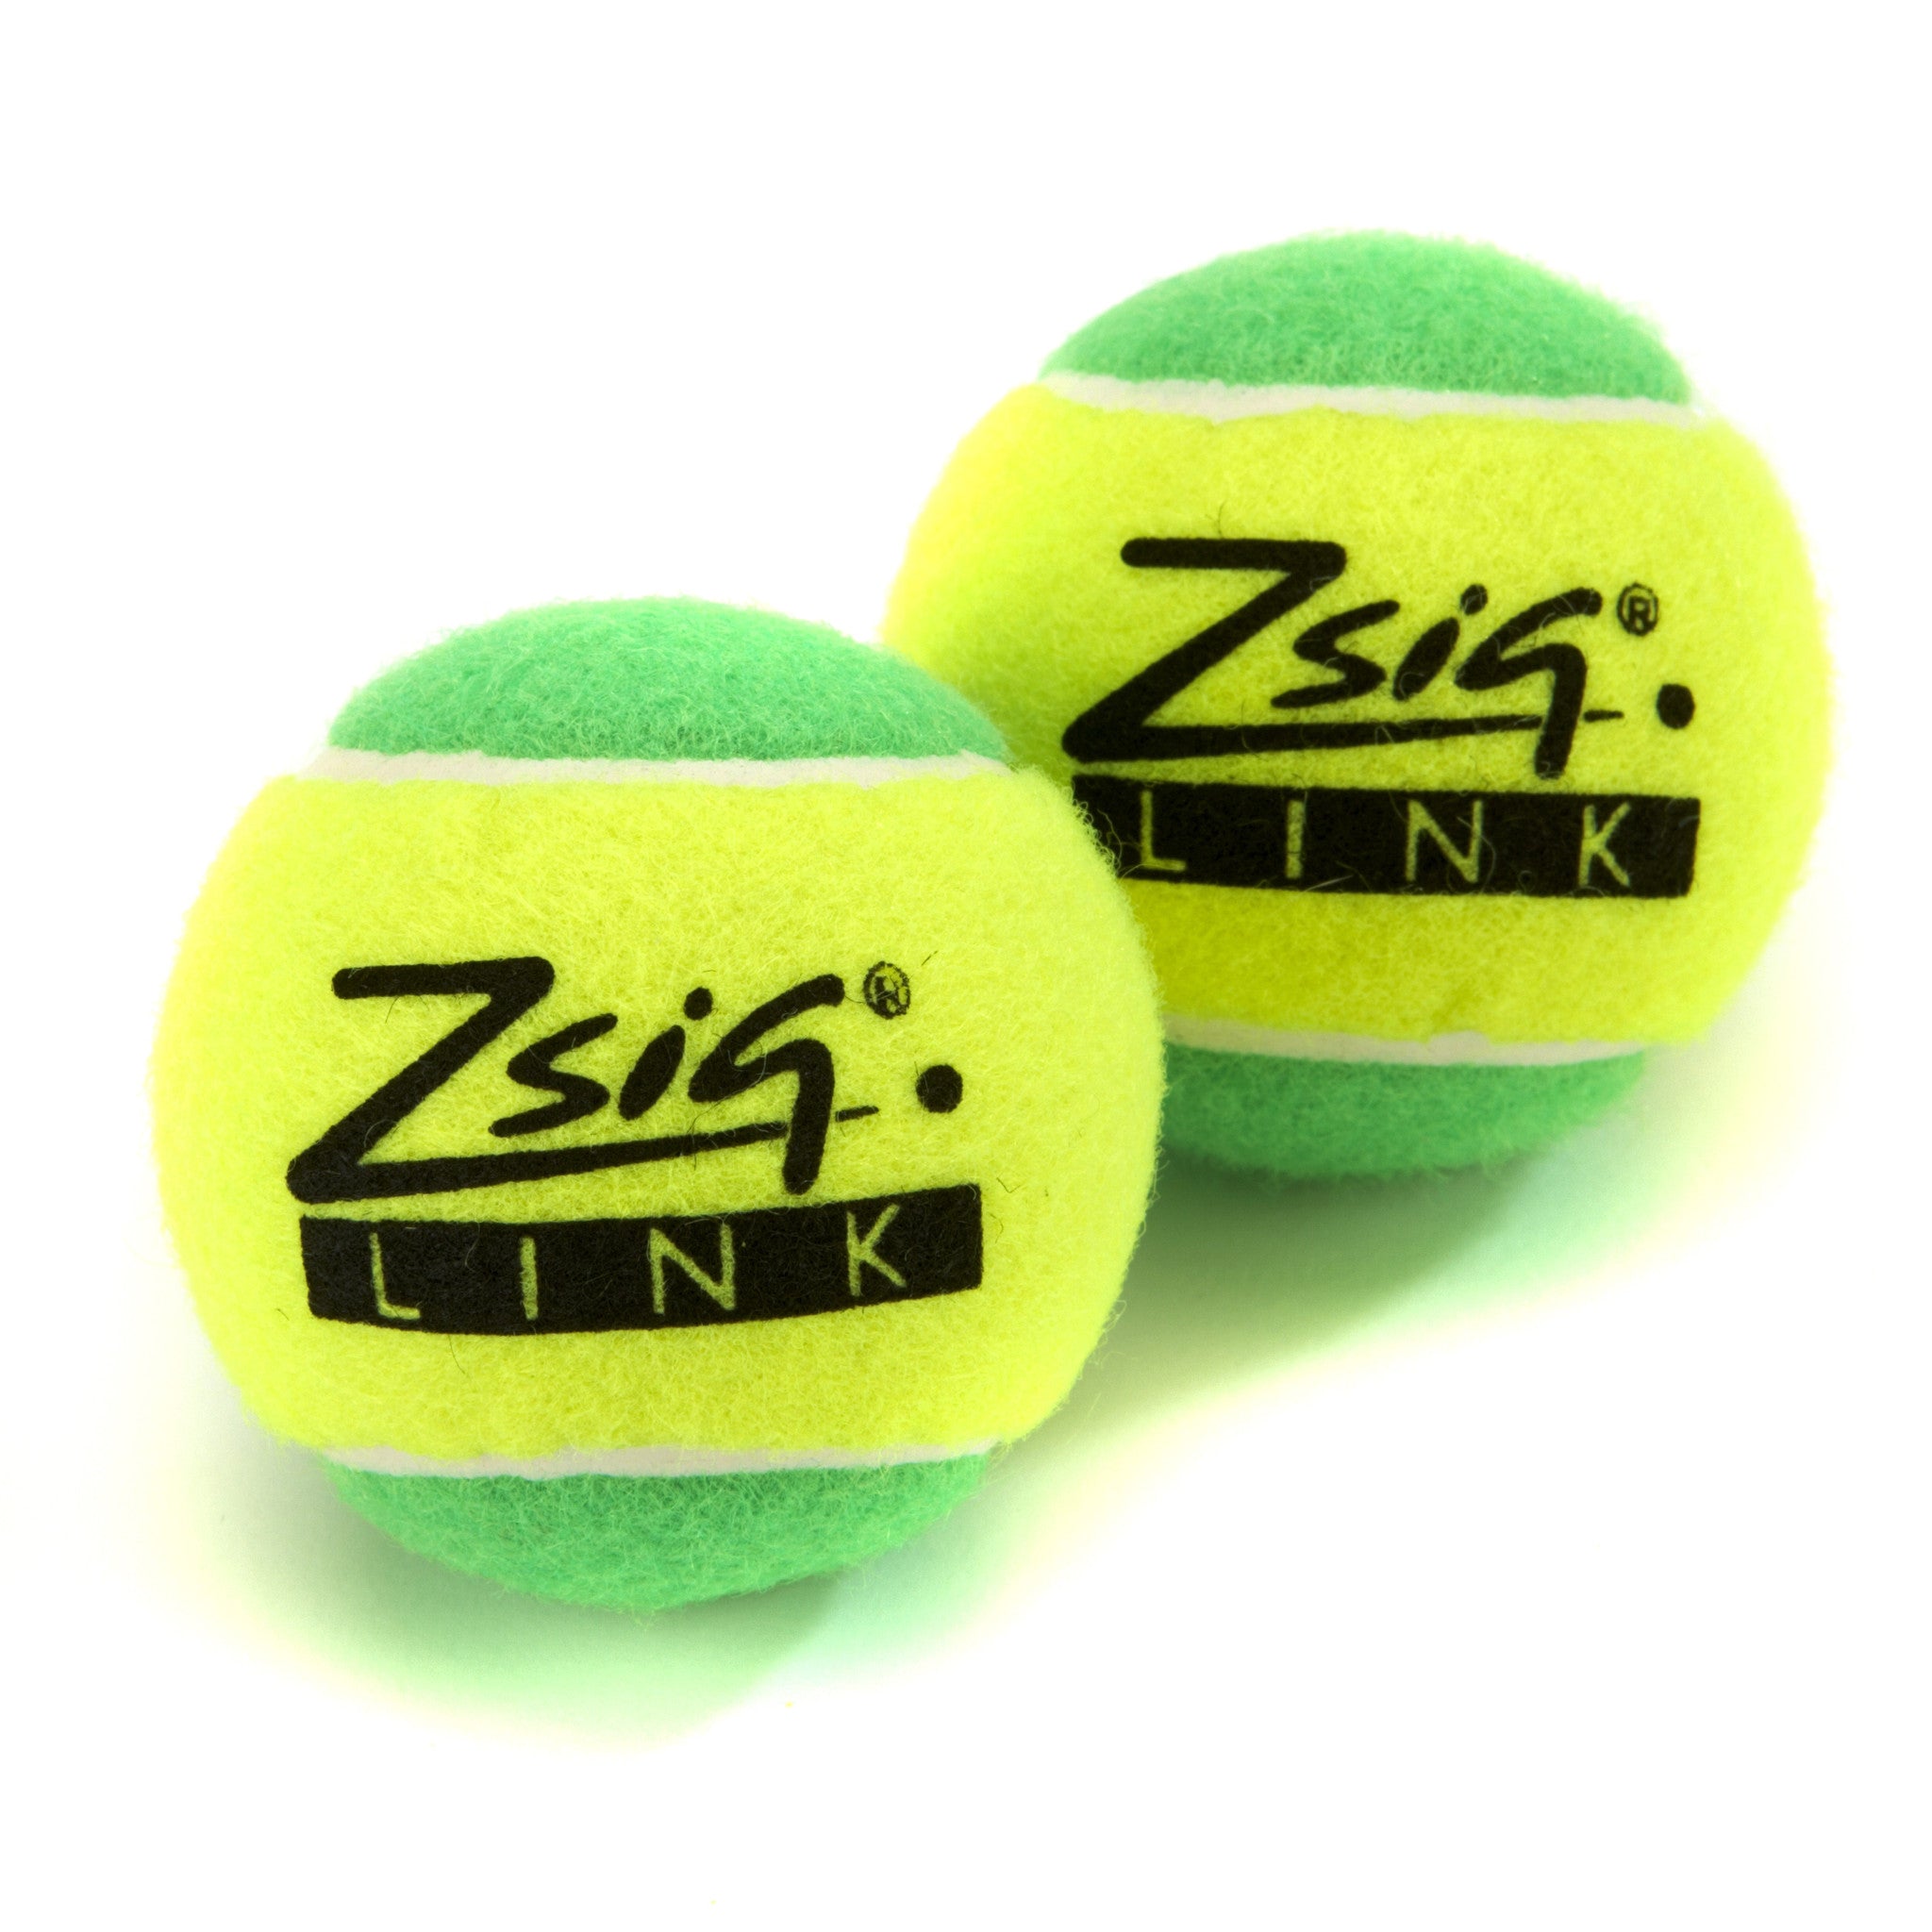 Green Mini Tennis Balls. Zsig "Link Green", two balls. 